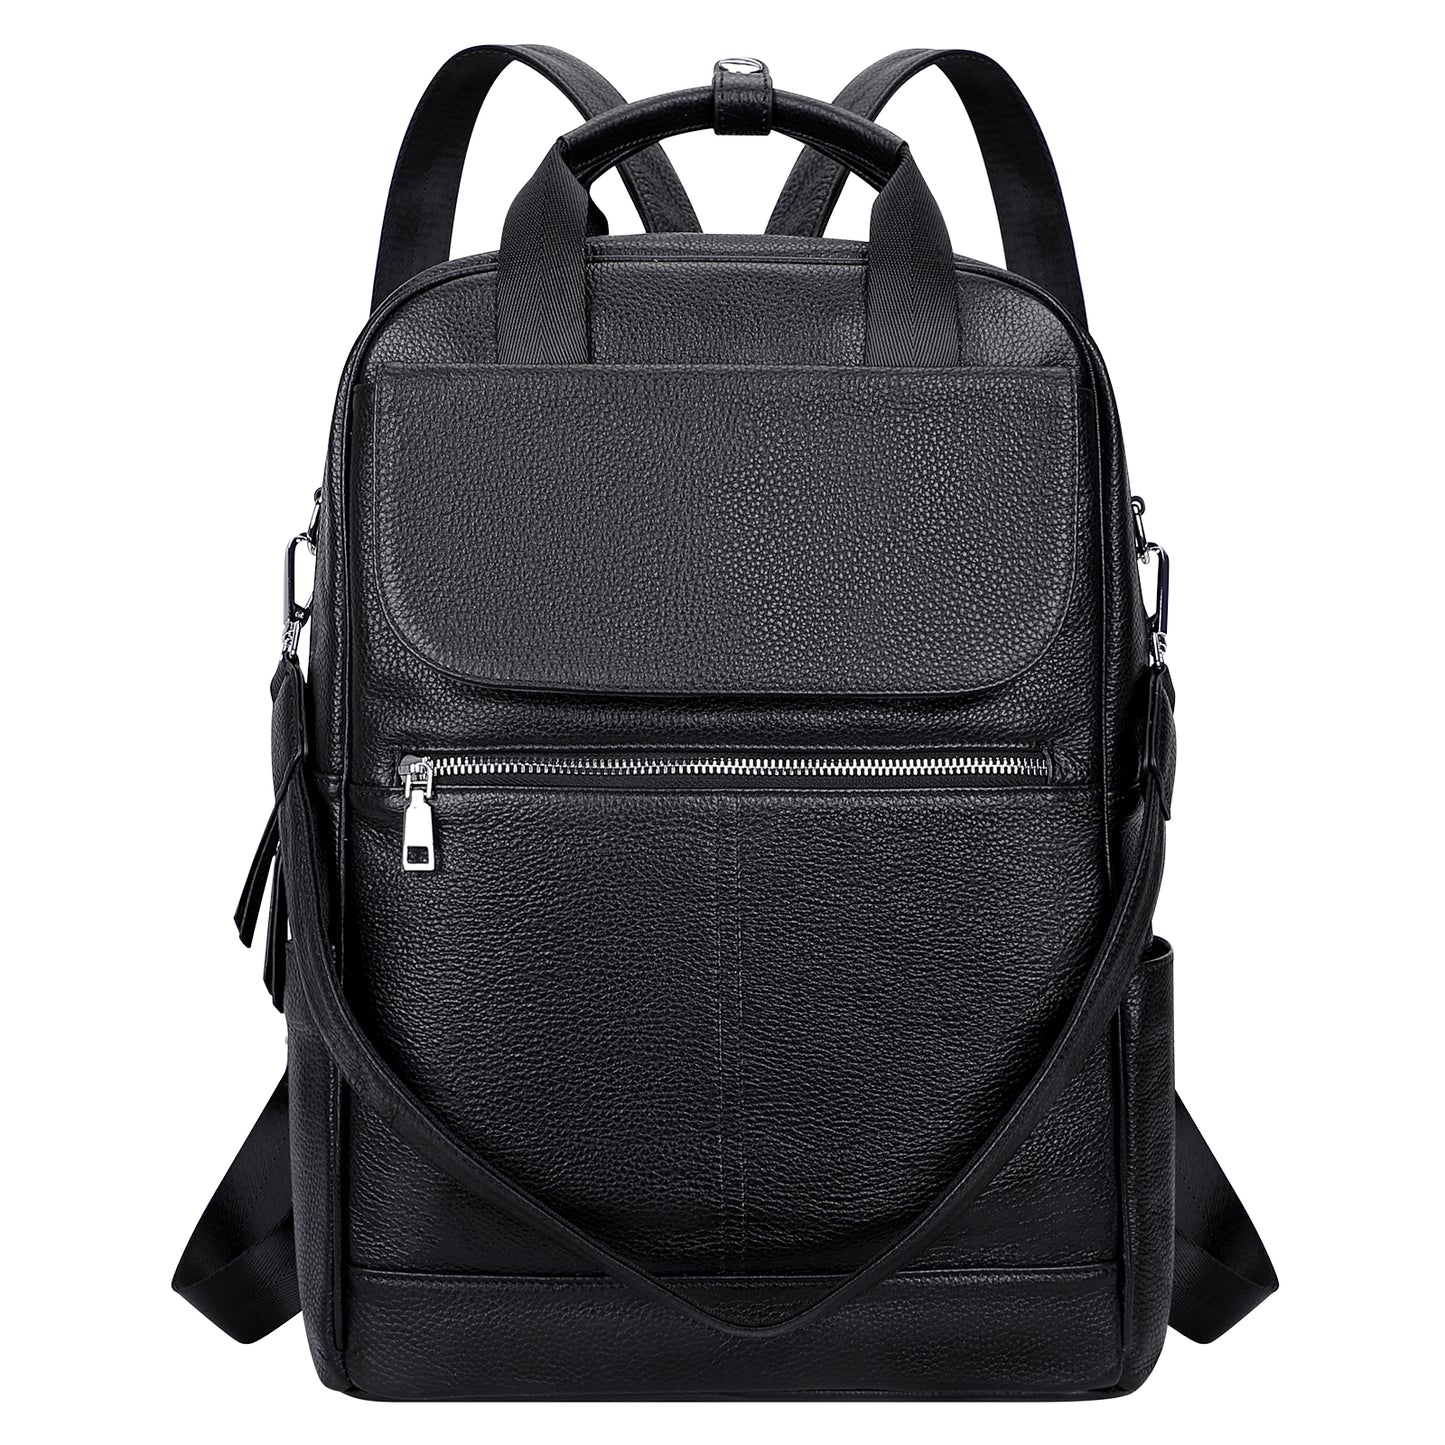 ALTOSY Leather Laptop Backpack Large